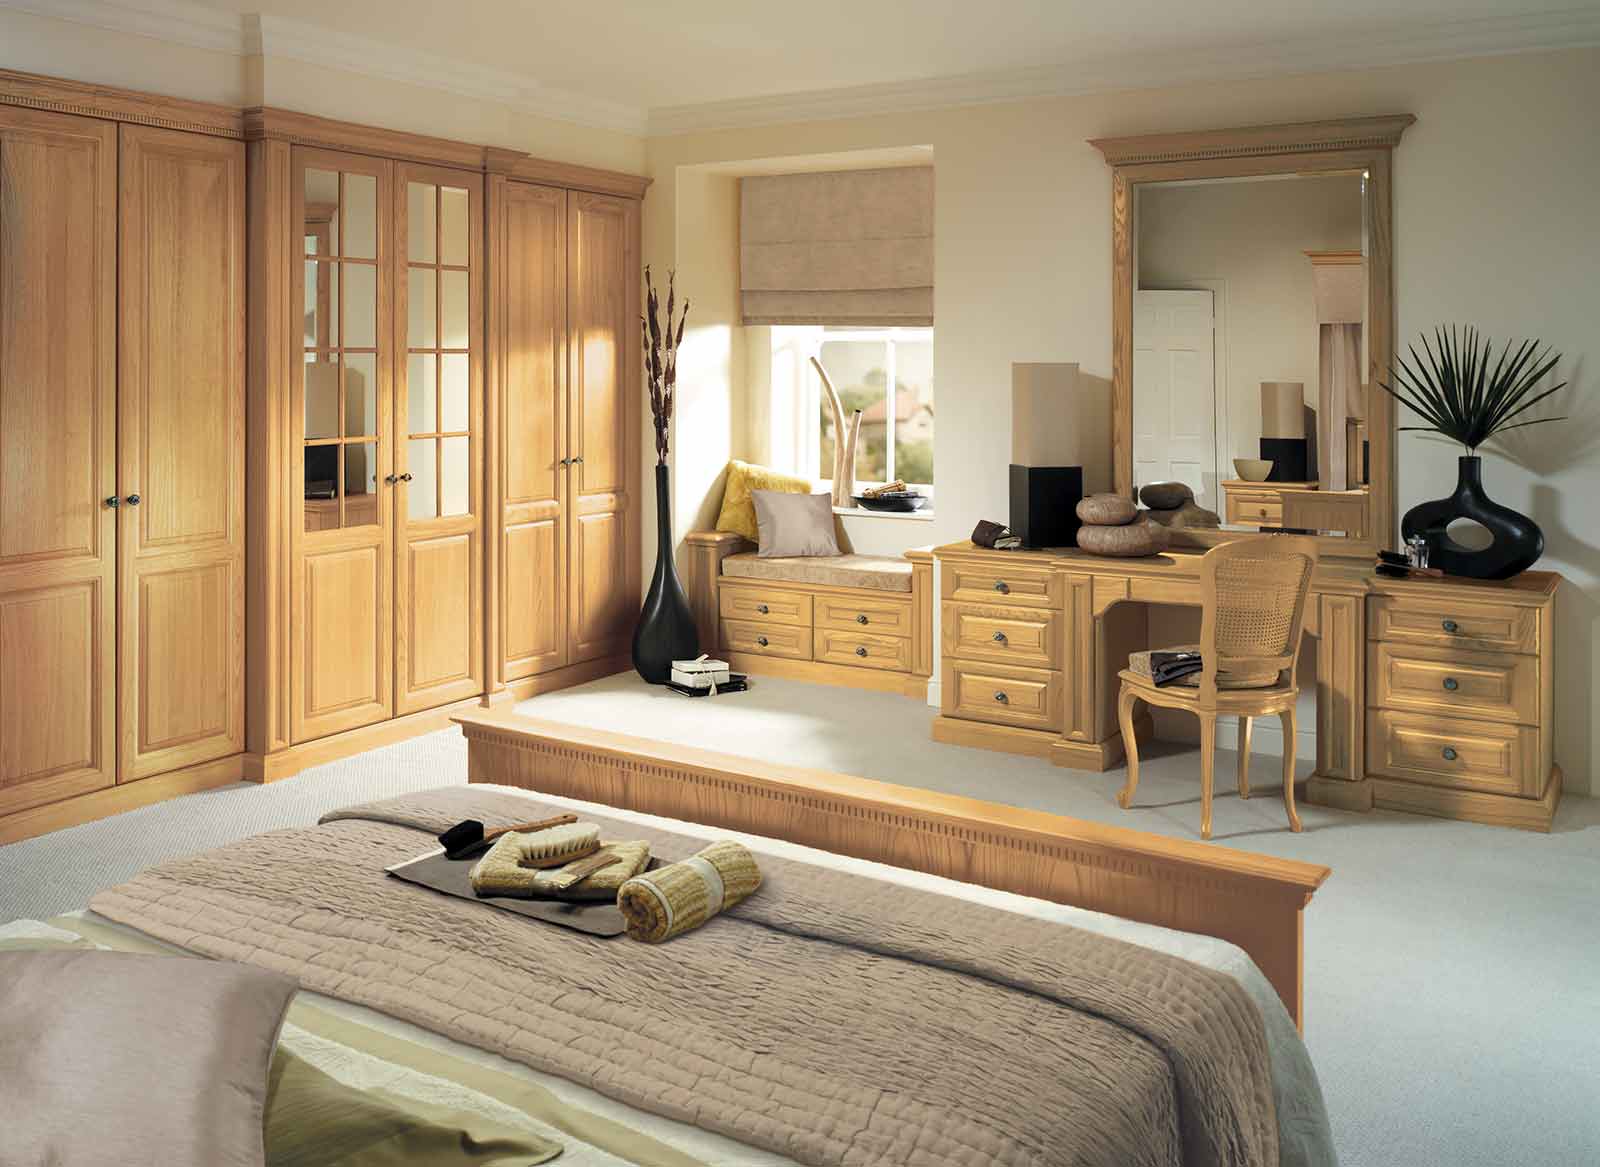 Bedroom Furniture Images - Bedroom Furniture Luxury Wood Elegant Modern ...